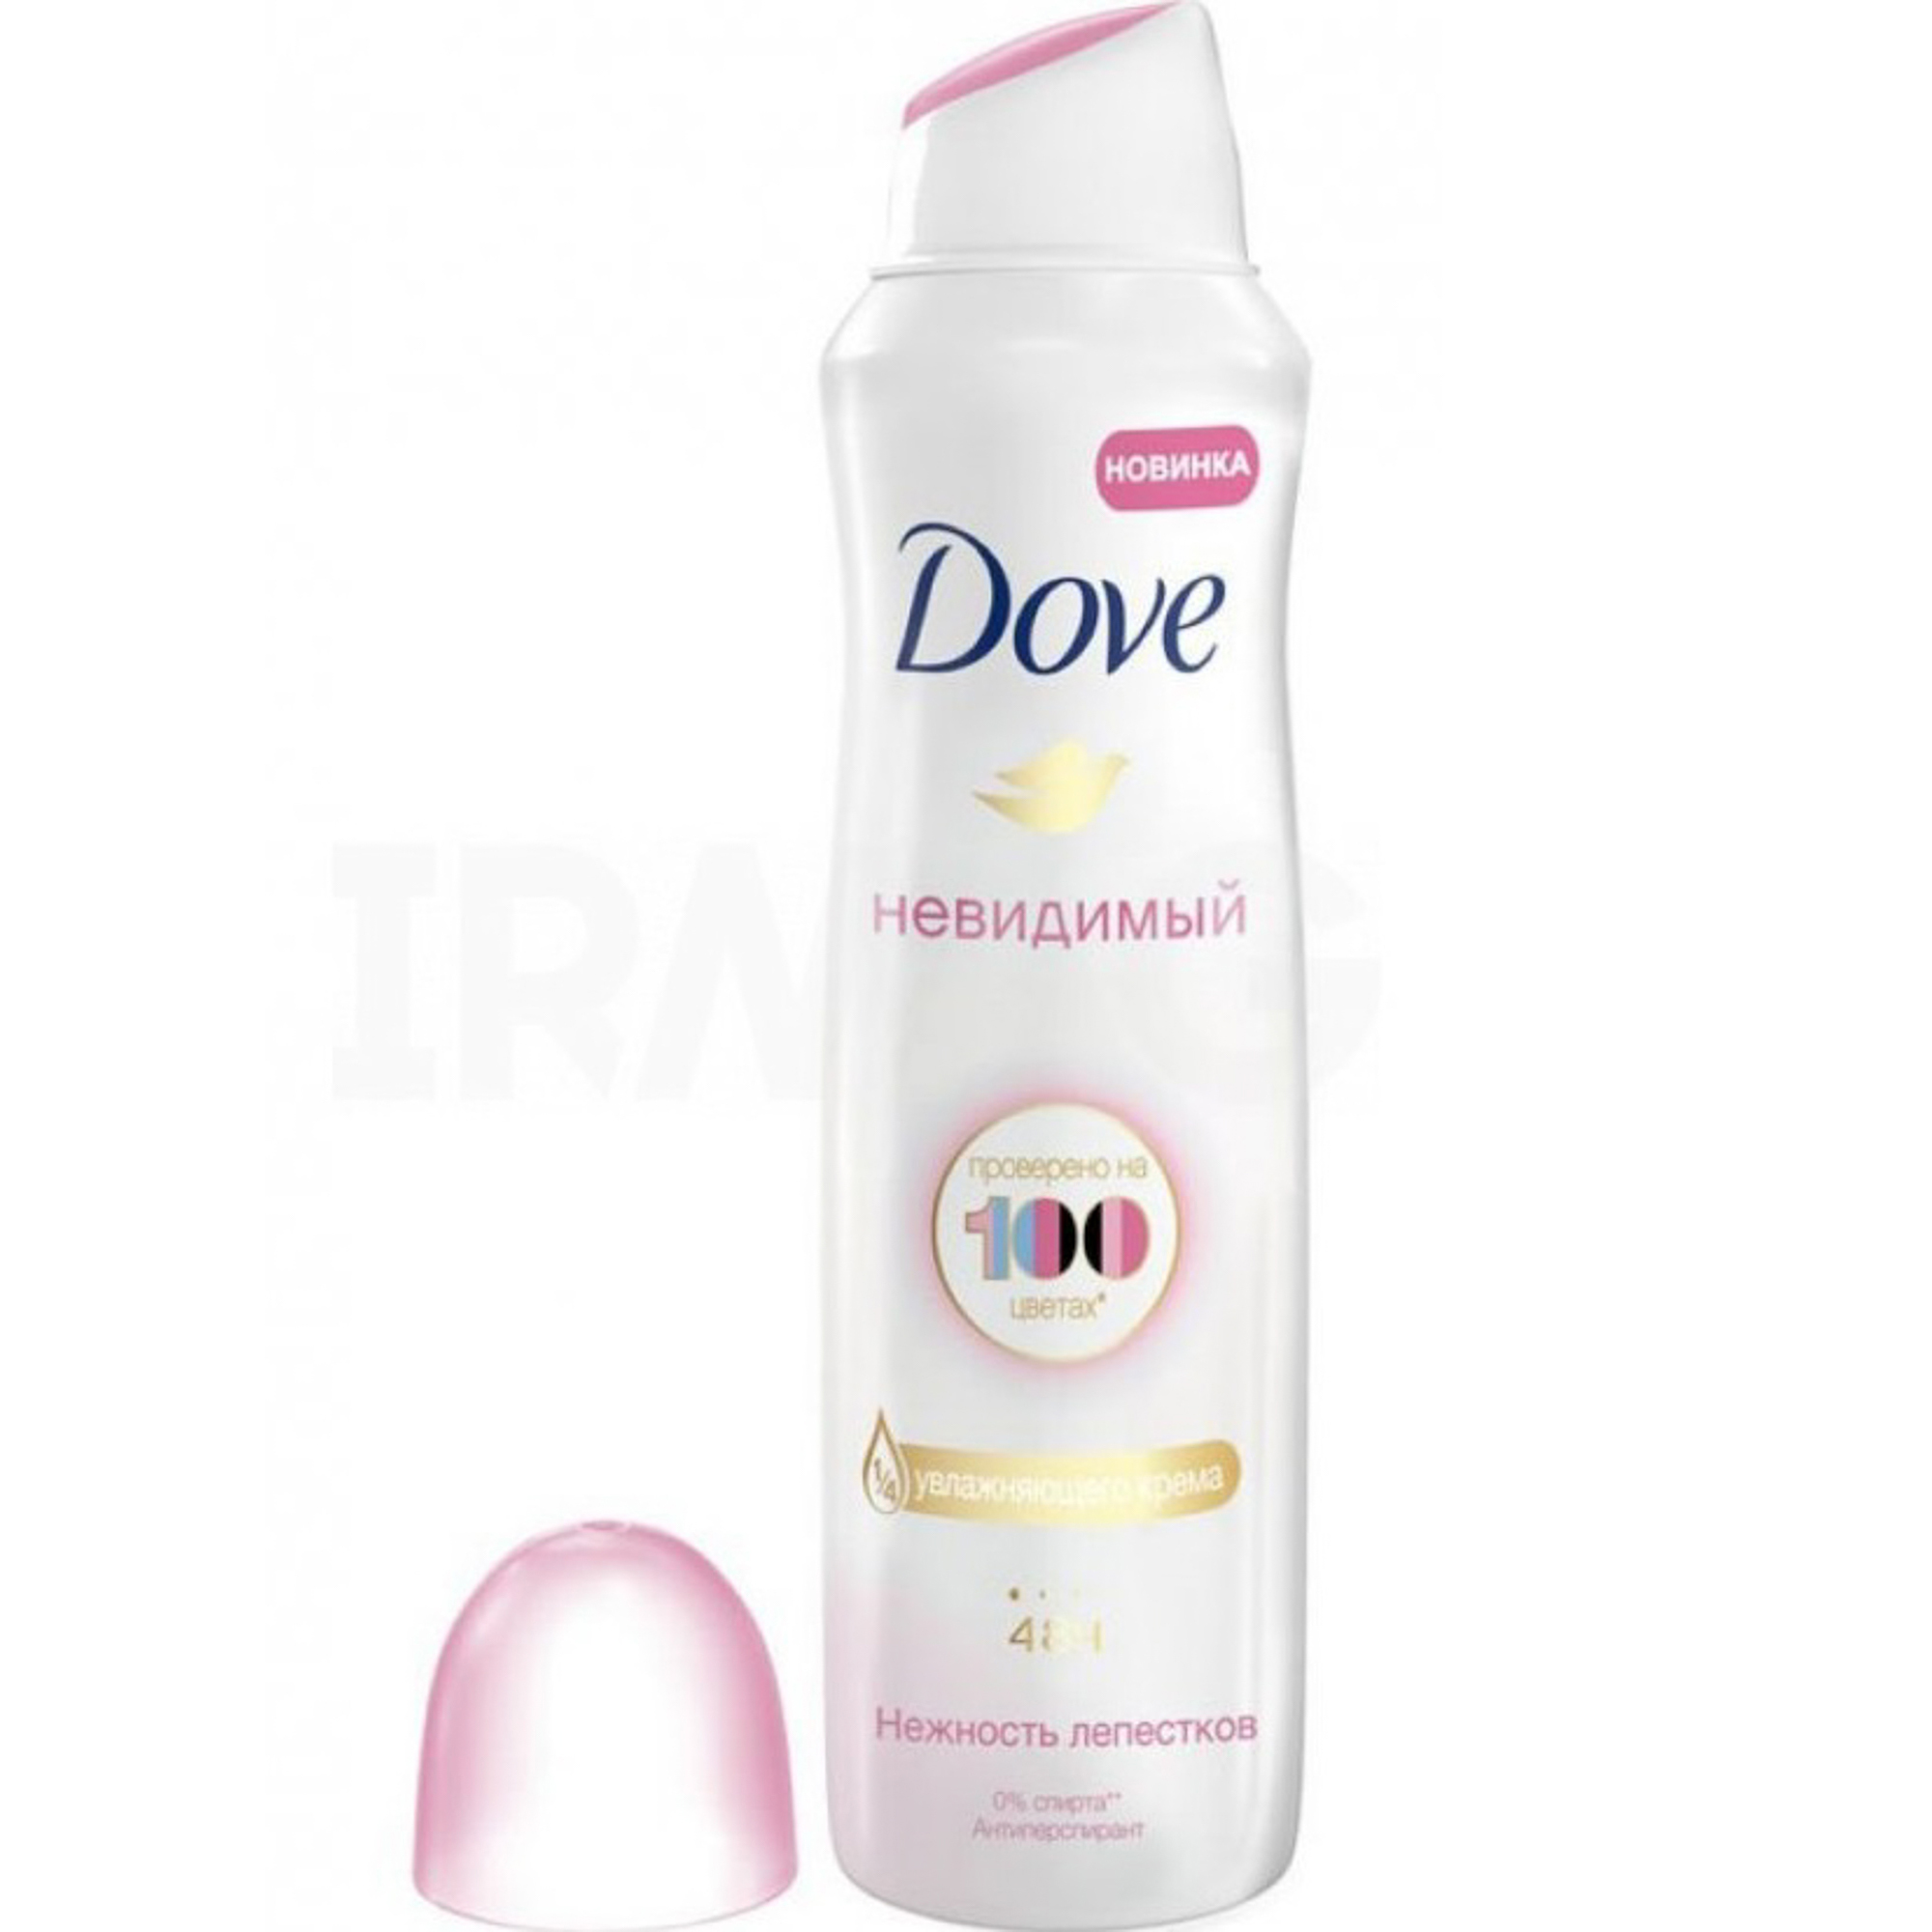 Дезодорант-спрей Dove Invisible Dry Невидимый Нежность лепестков 150мл, размер 18x5x5 см 67380635 - фото 2